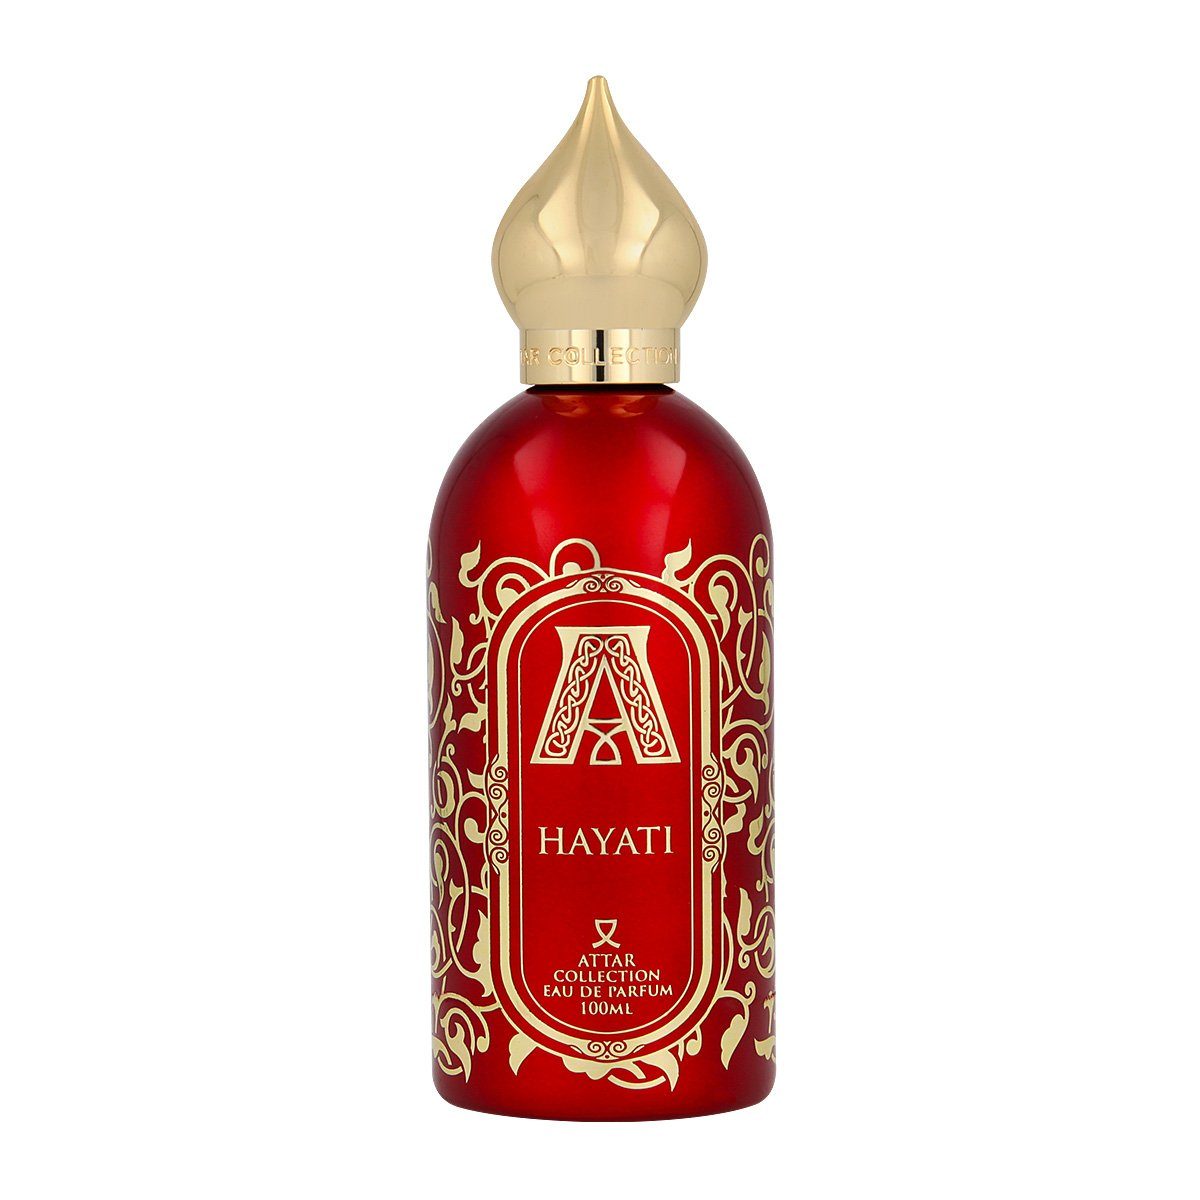 Attar Collection Eau de Parfum Hayati